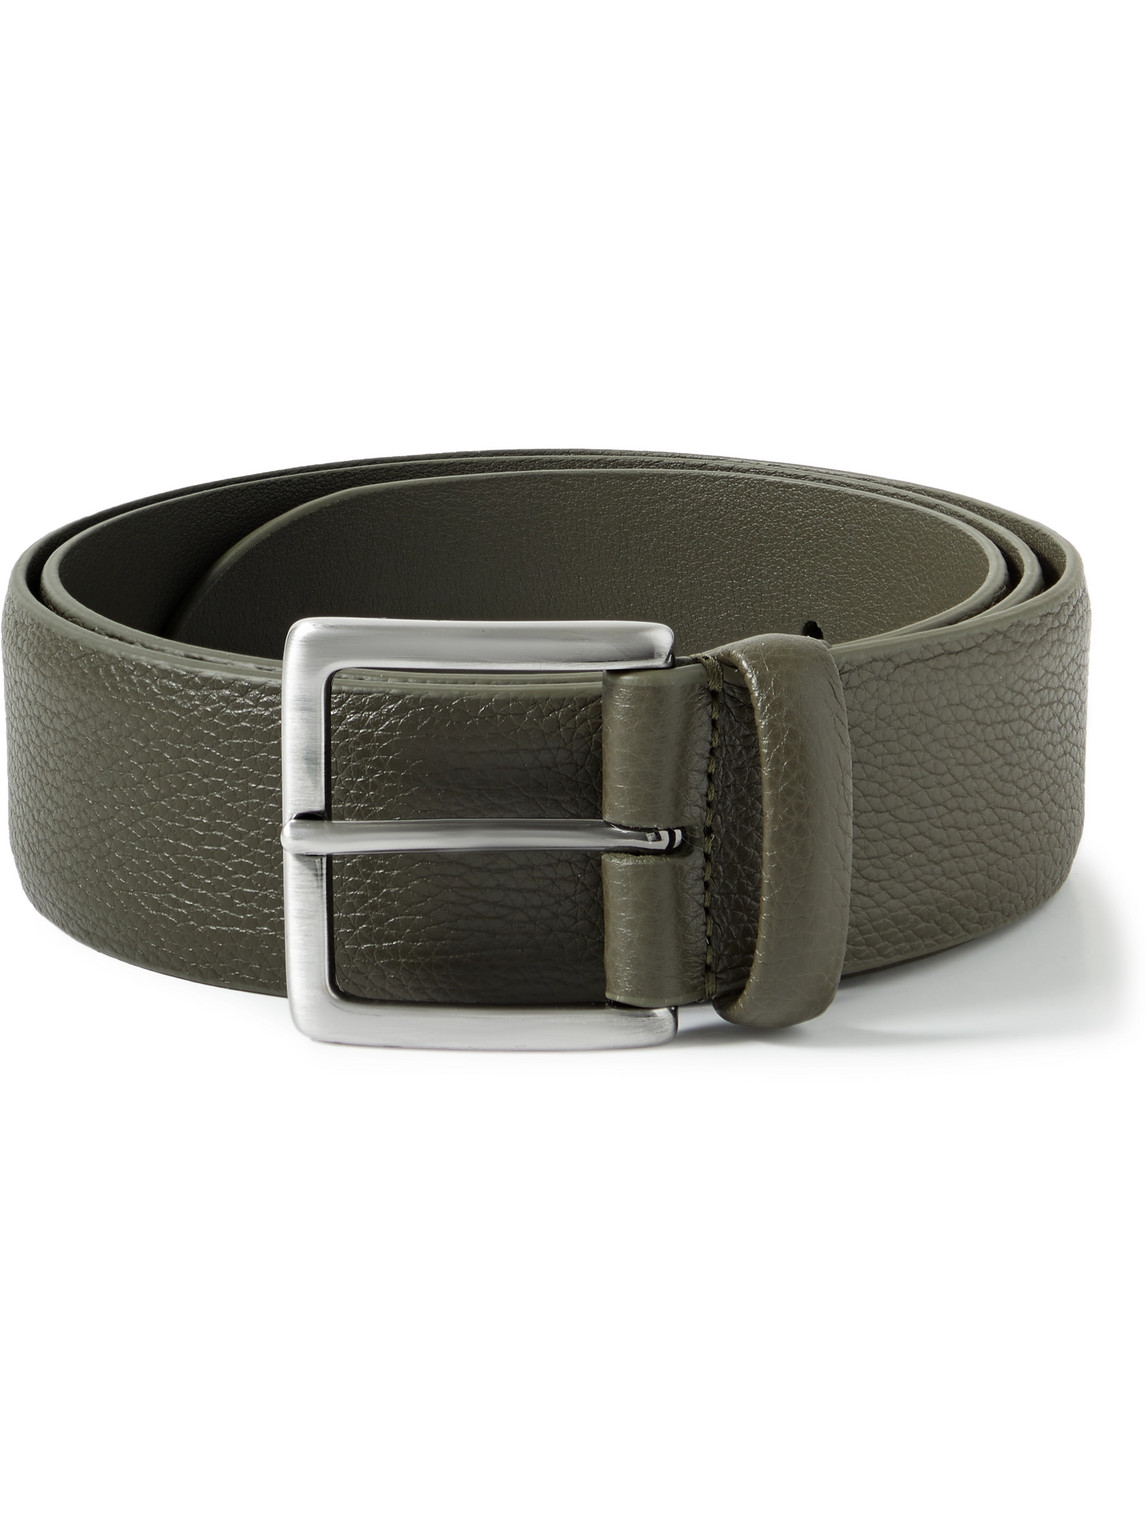 Anderson's 4cm Full-grain Leather Belt In Green